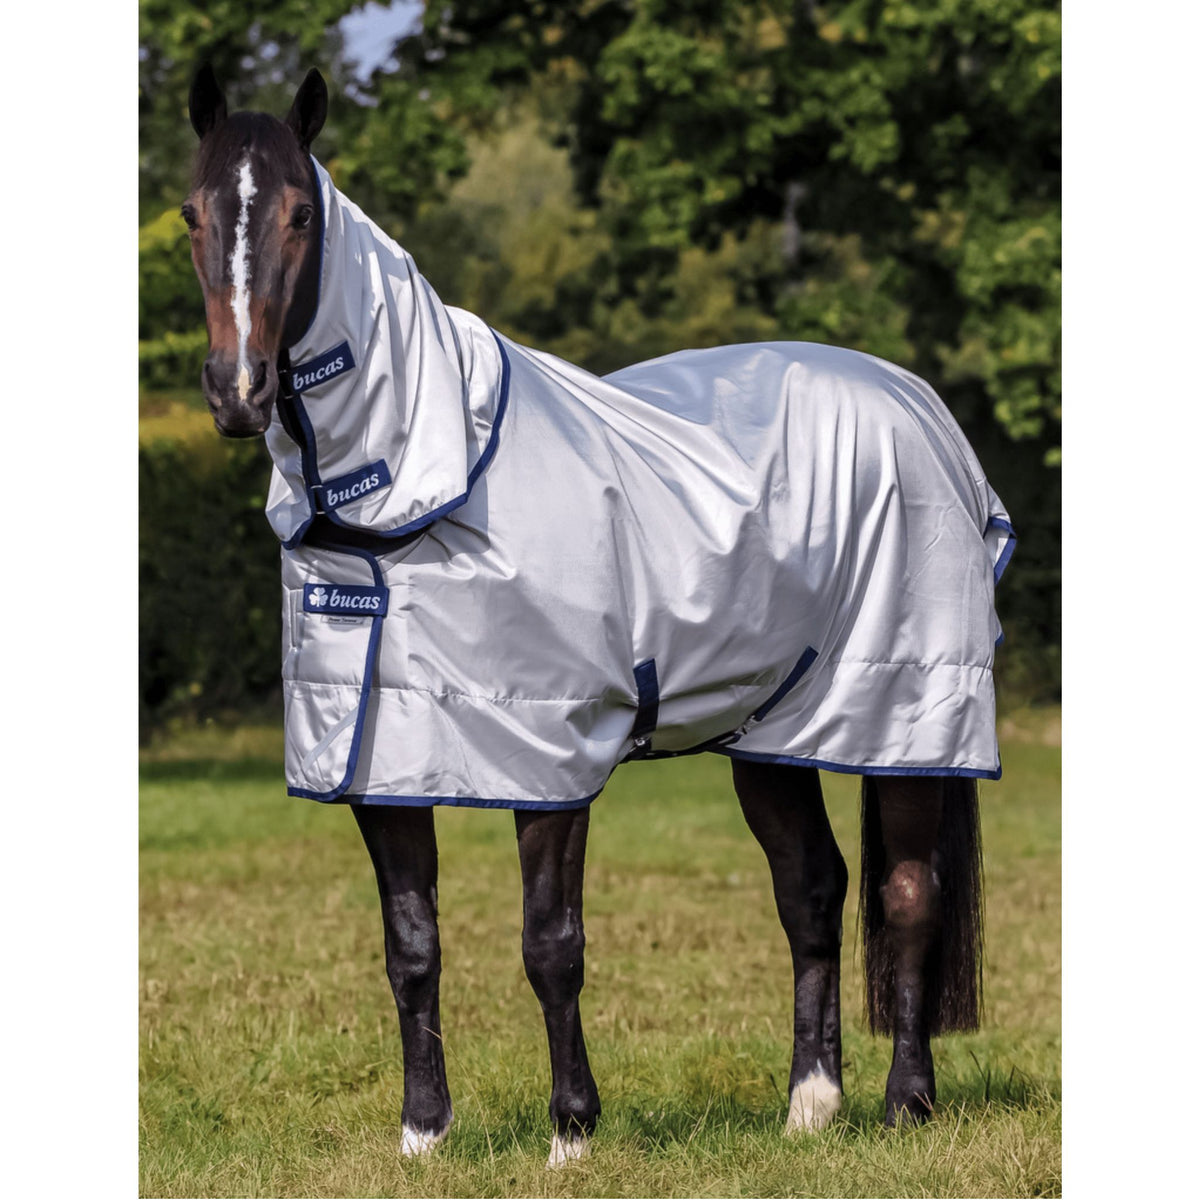 Bay horse wearing silver Bucas rug with blue trim, in paddock.